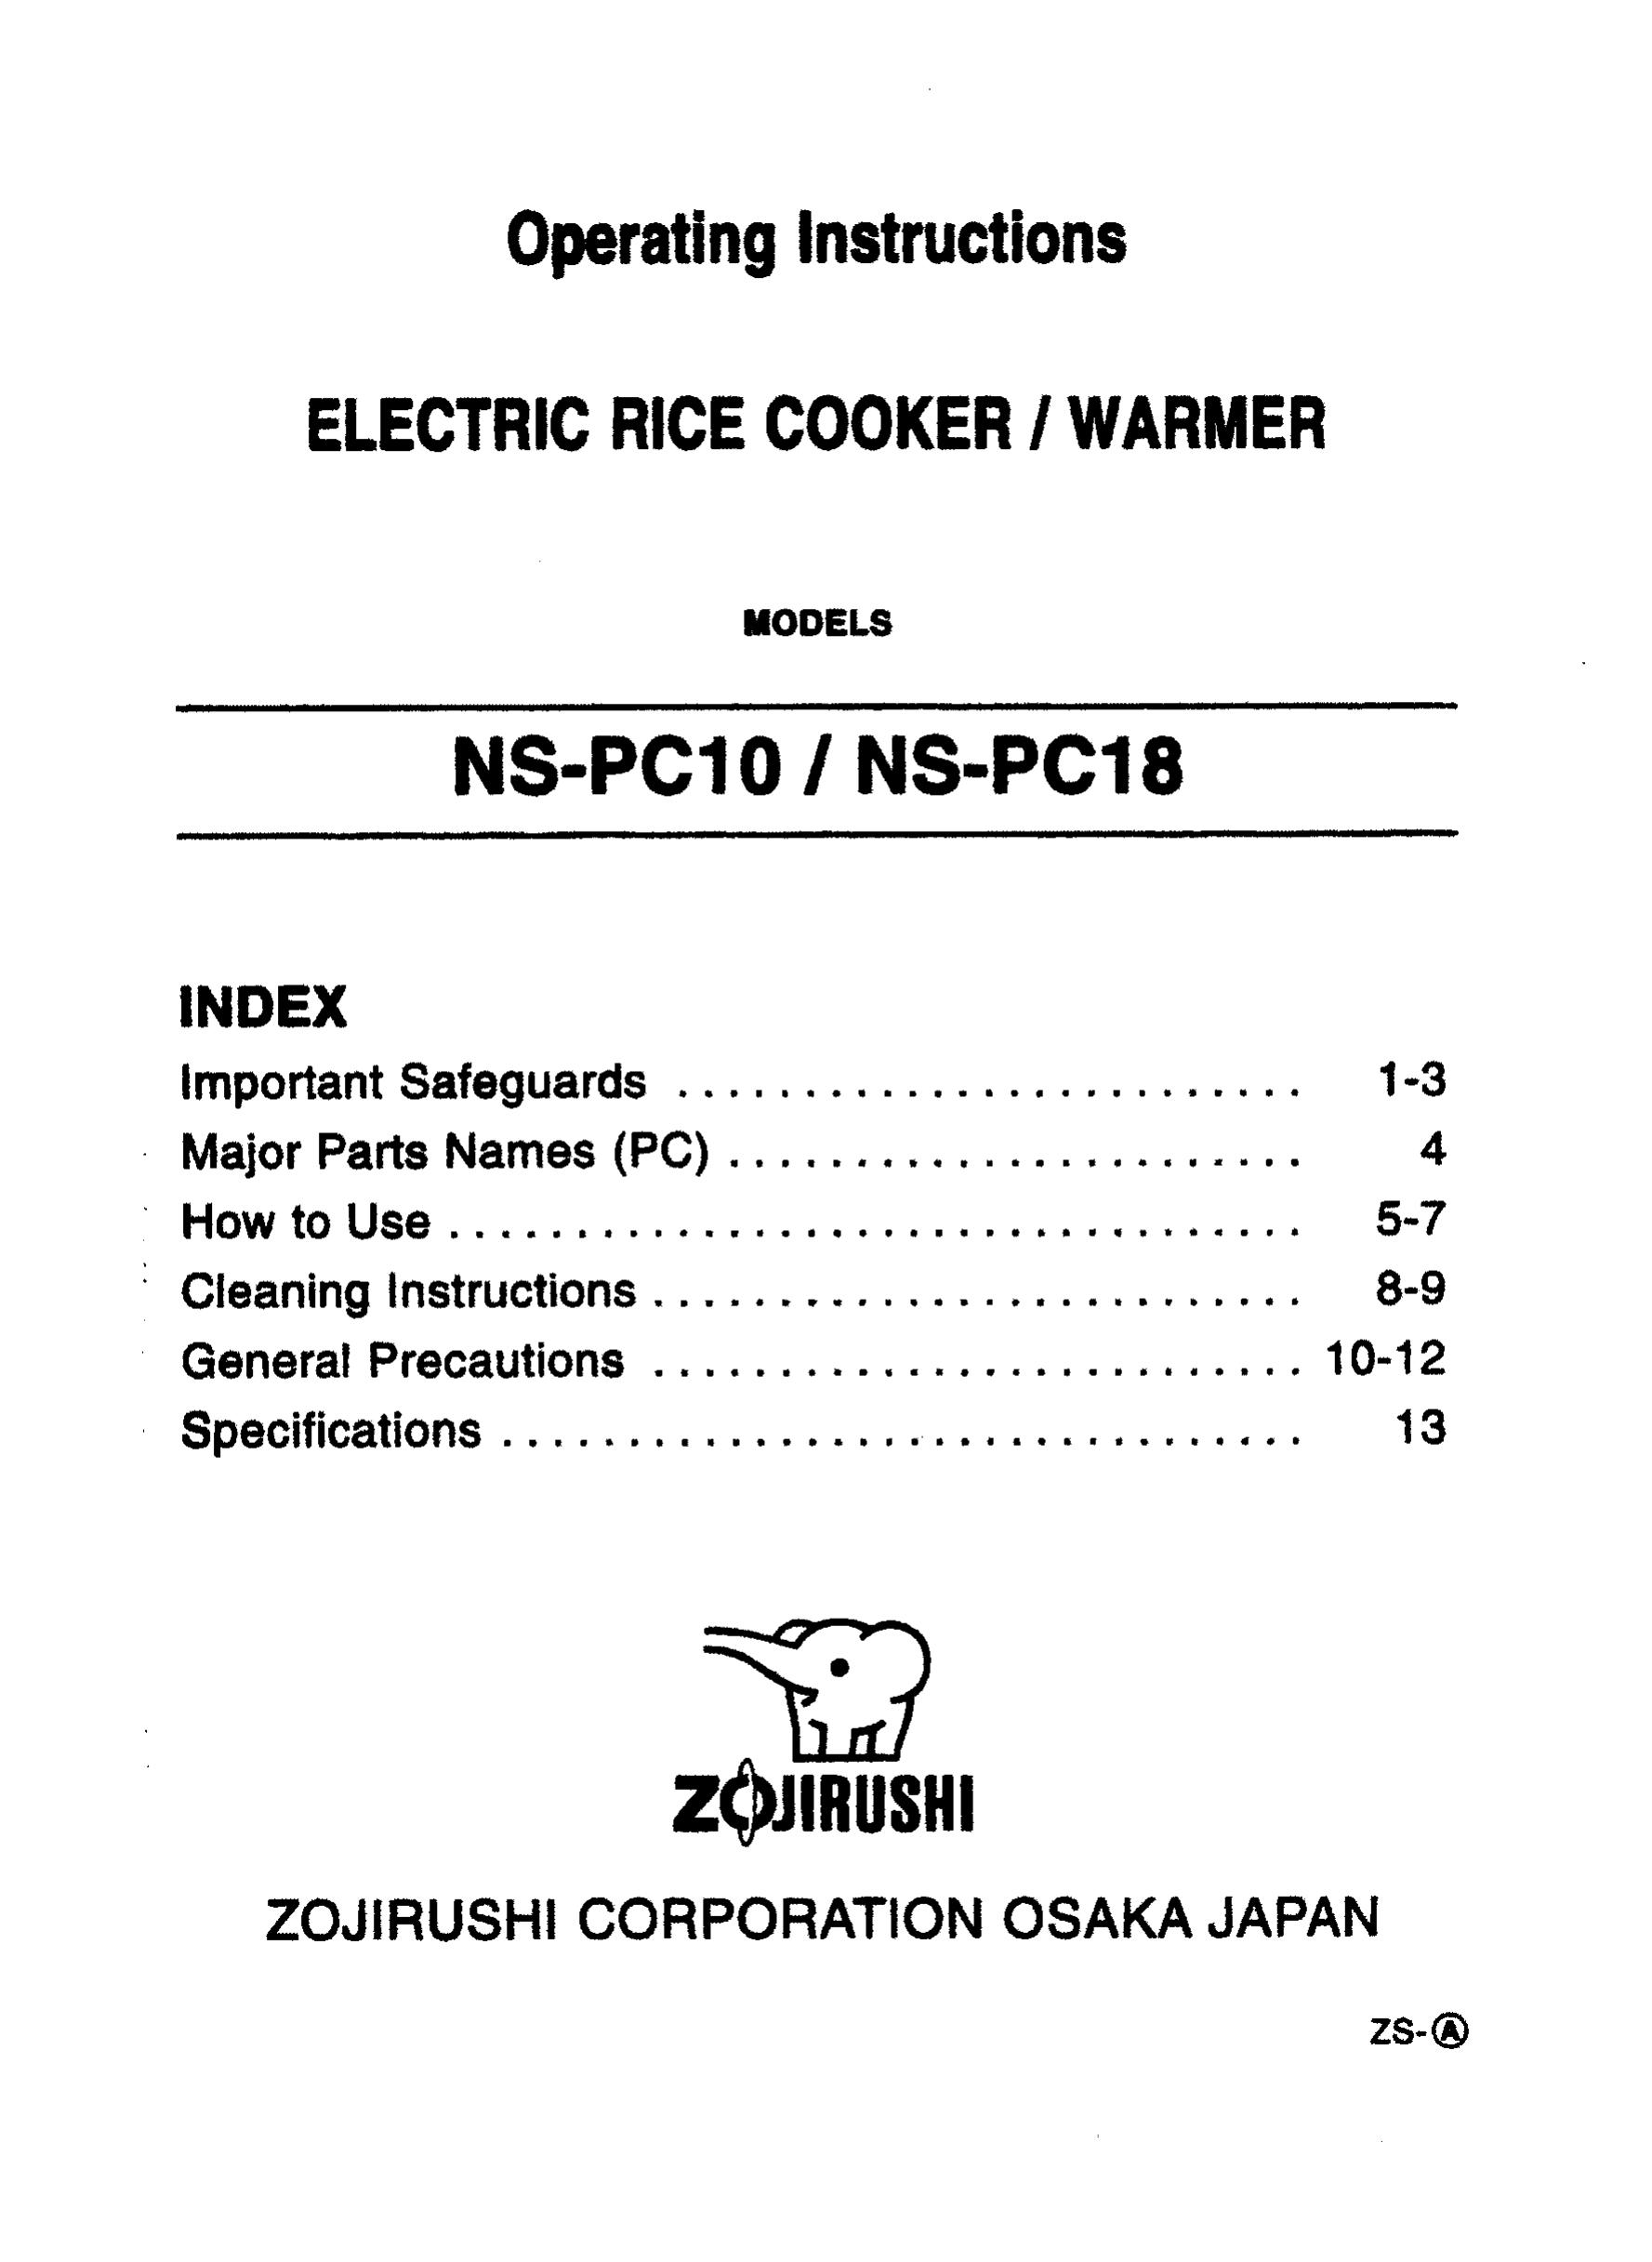 Zojirushi NS-PC10 Rice Cooker User Manual